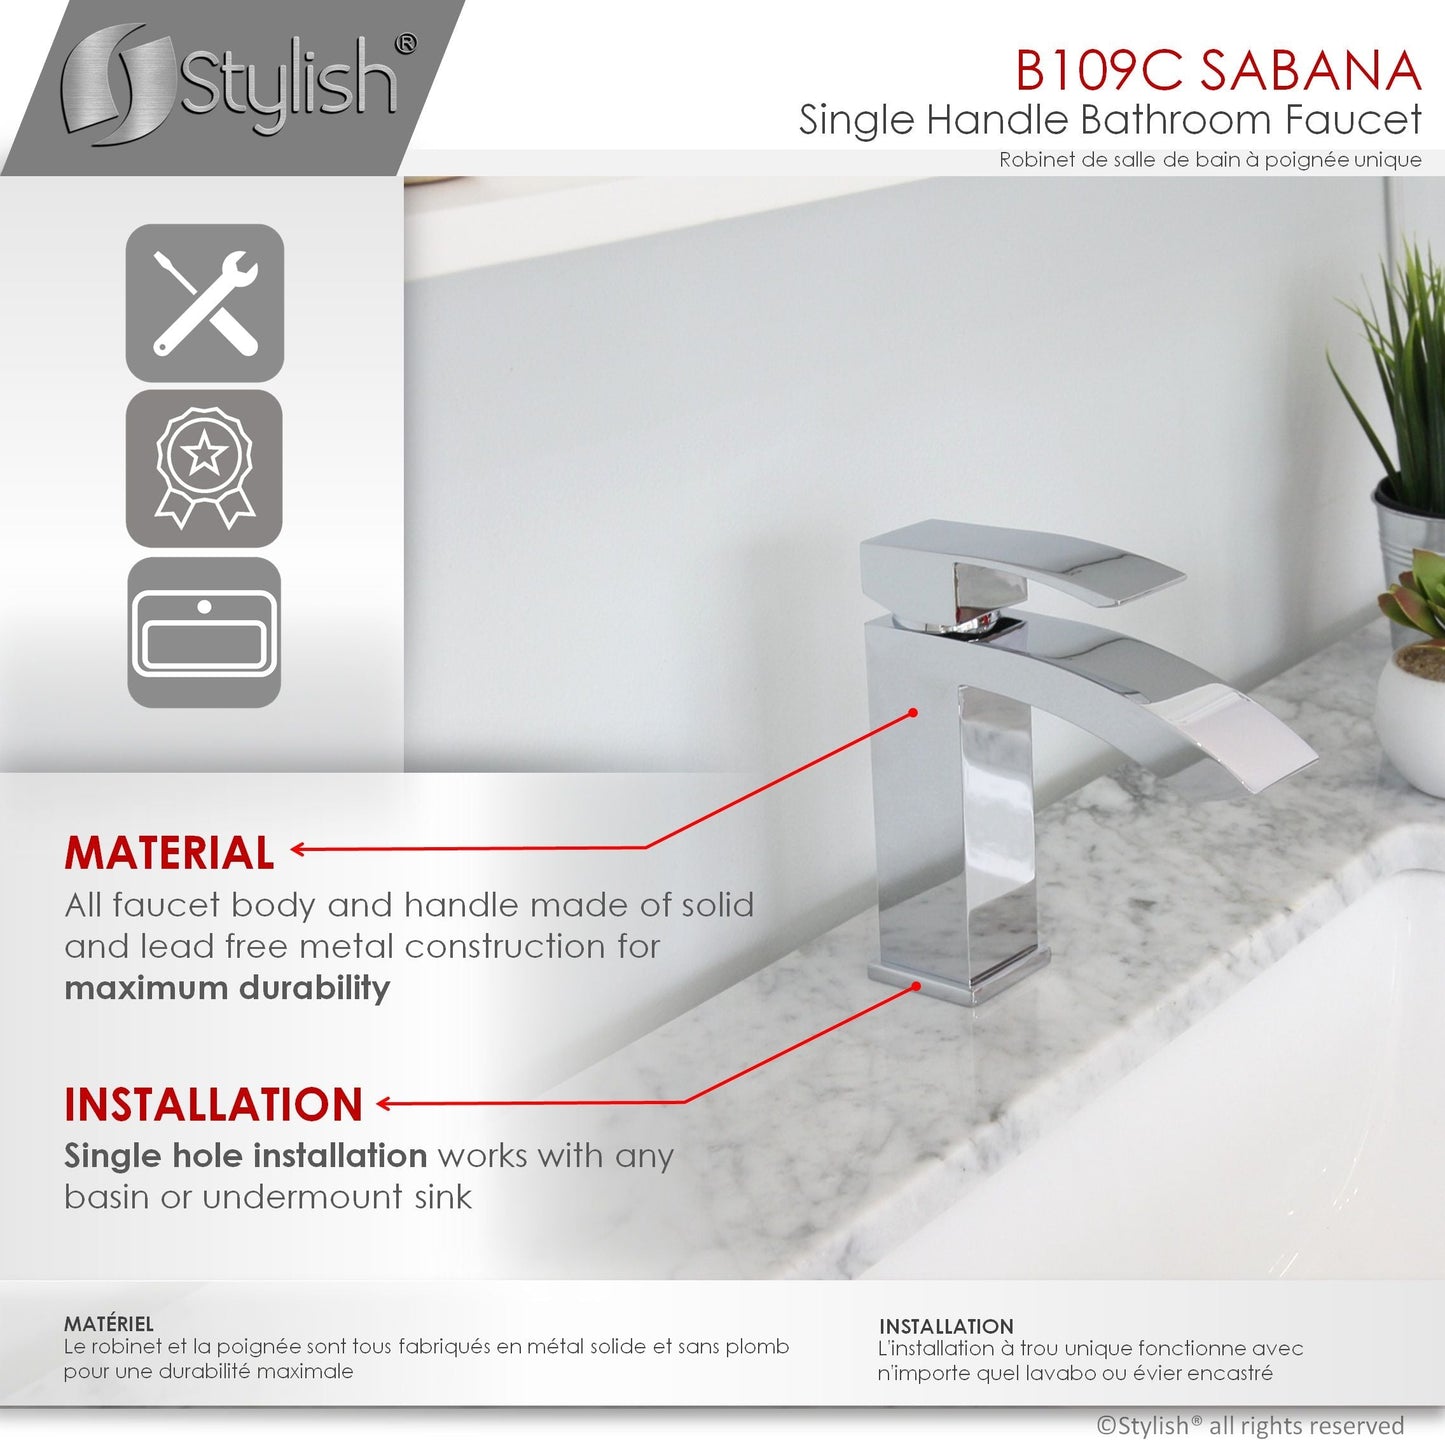 Stylish Sabana Single Handle 7" Bathroom Faucet for Single Hole Brass Basin Mixer Tap, Polished Chrome Finish B-109C